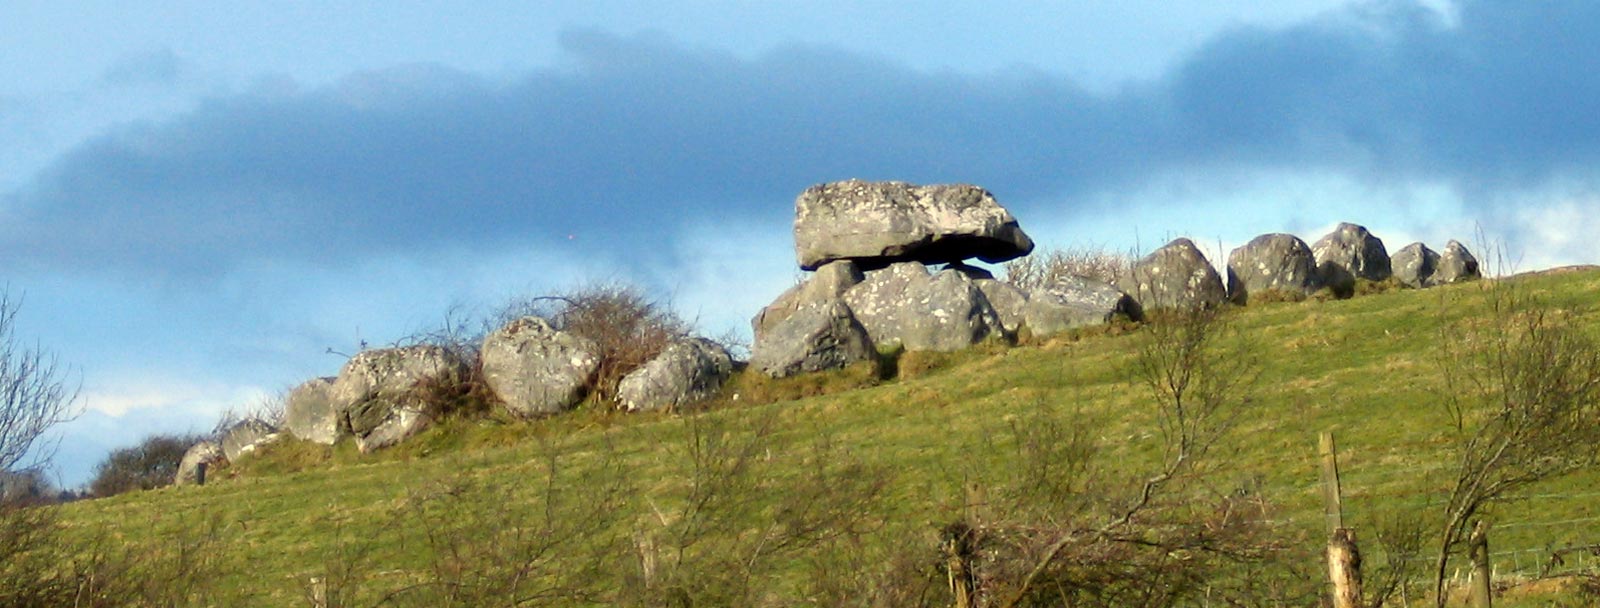 The Kissing Stone, dolmen 7 at Carrowmore in County Sligo.